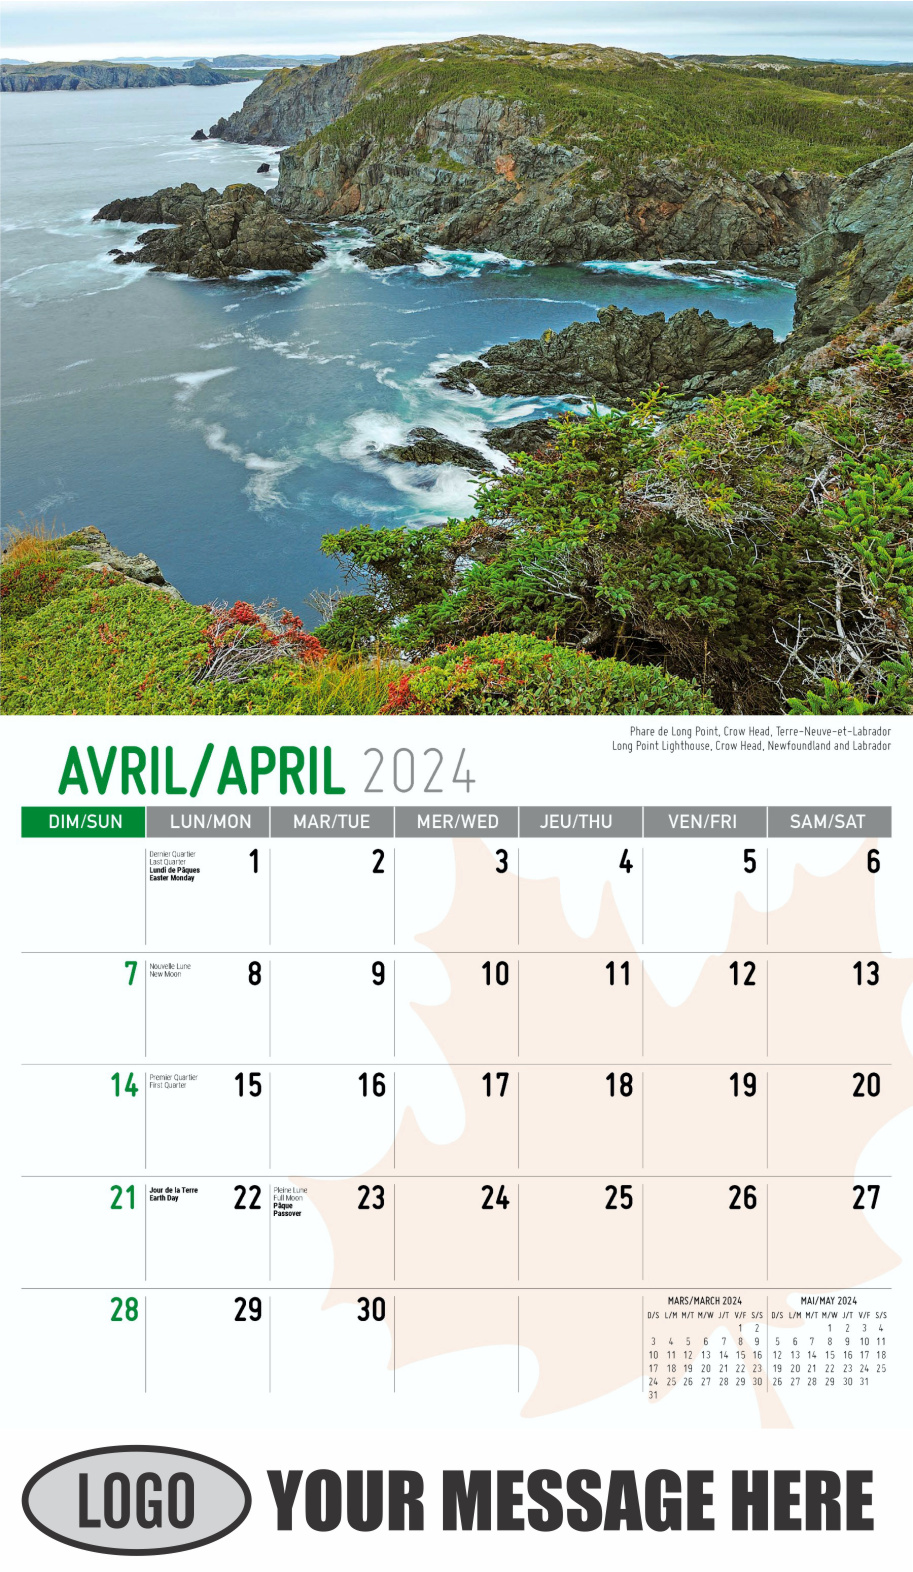 Scenes of Canada 2024 Bilingual Business Advertising Calendar - April